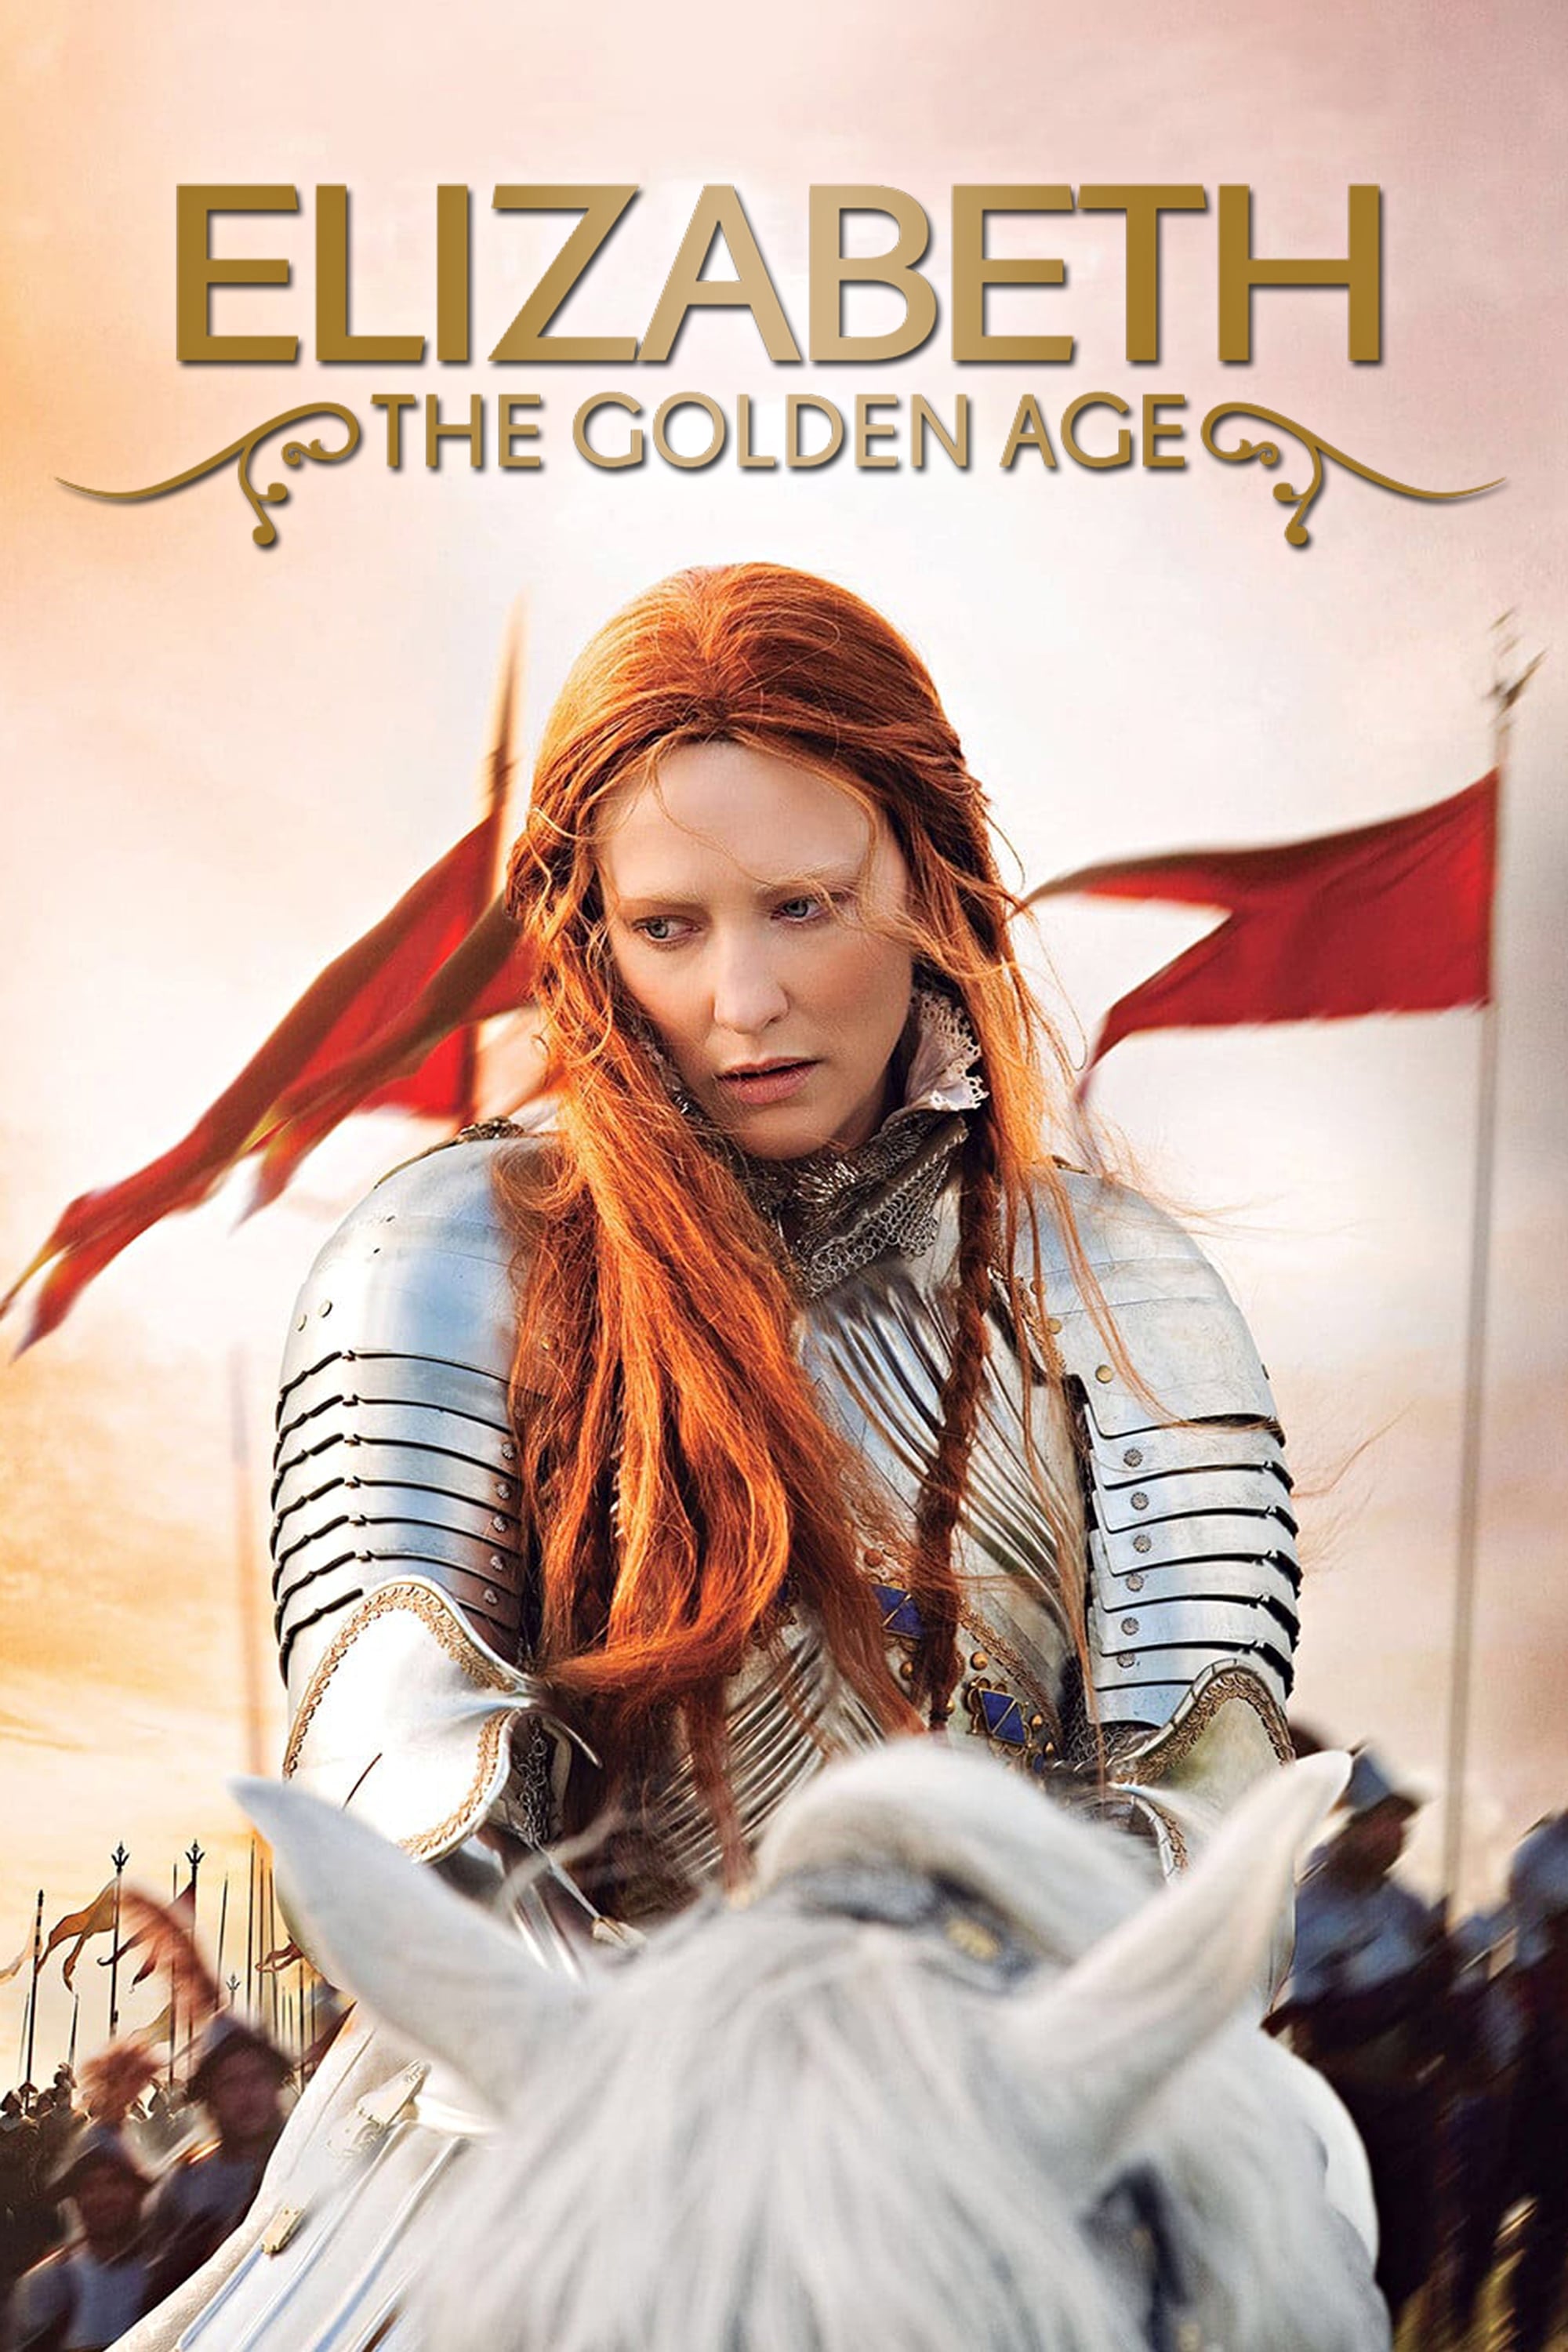 Stiahni si Filmy DVD Královna Alžběta: Zlatý věk /  Elizabeth: The Golden Age (2007)(CZ/EN)(DVD9) = CSFD 68%